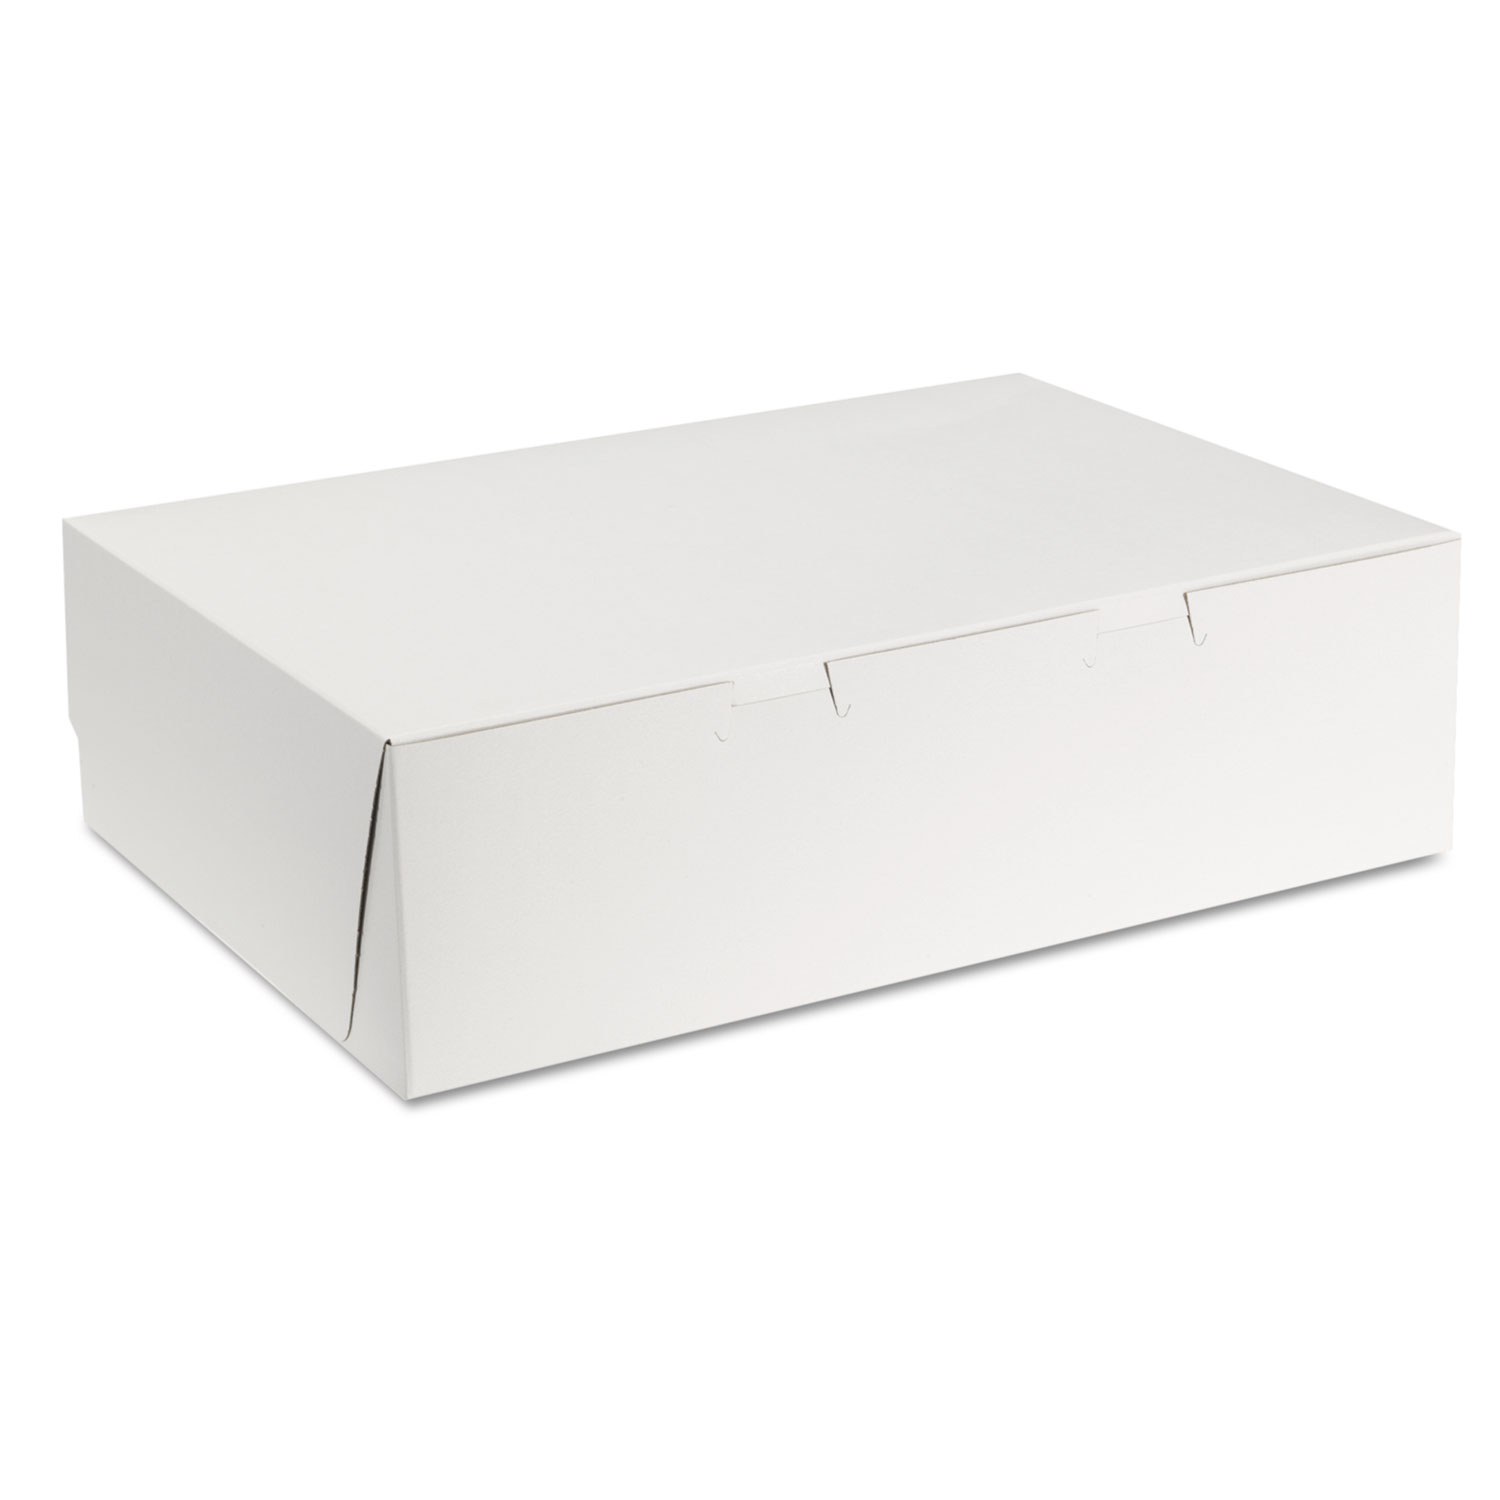 Beatiful cake box, cake box with lid, paper cake box | Cake box, bakery box  and more - bakery, cafe supplier | Aboxshop.com | Box cake, Paper cake box,  Buy cake